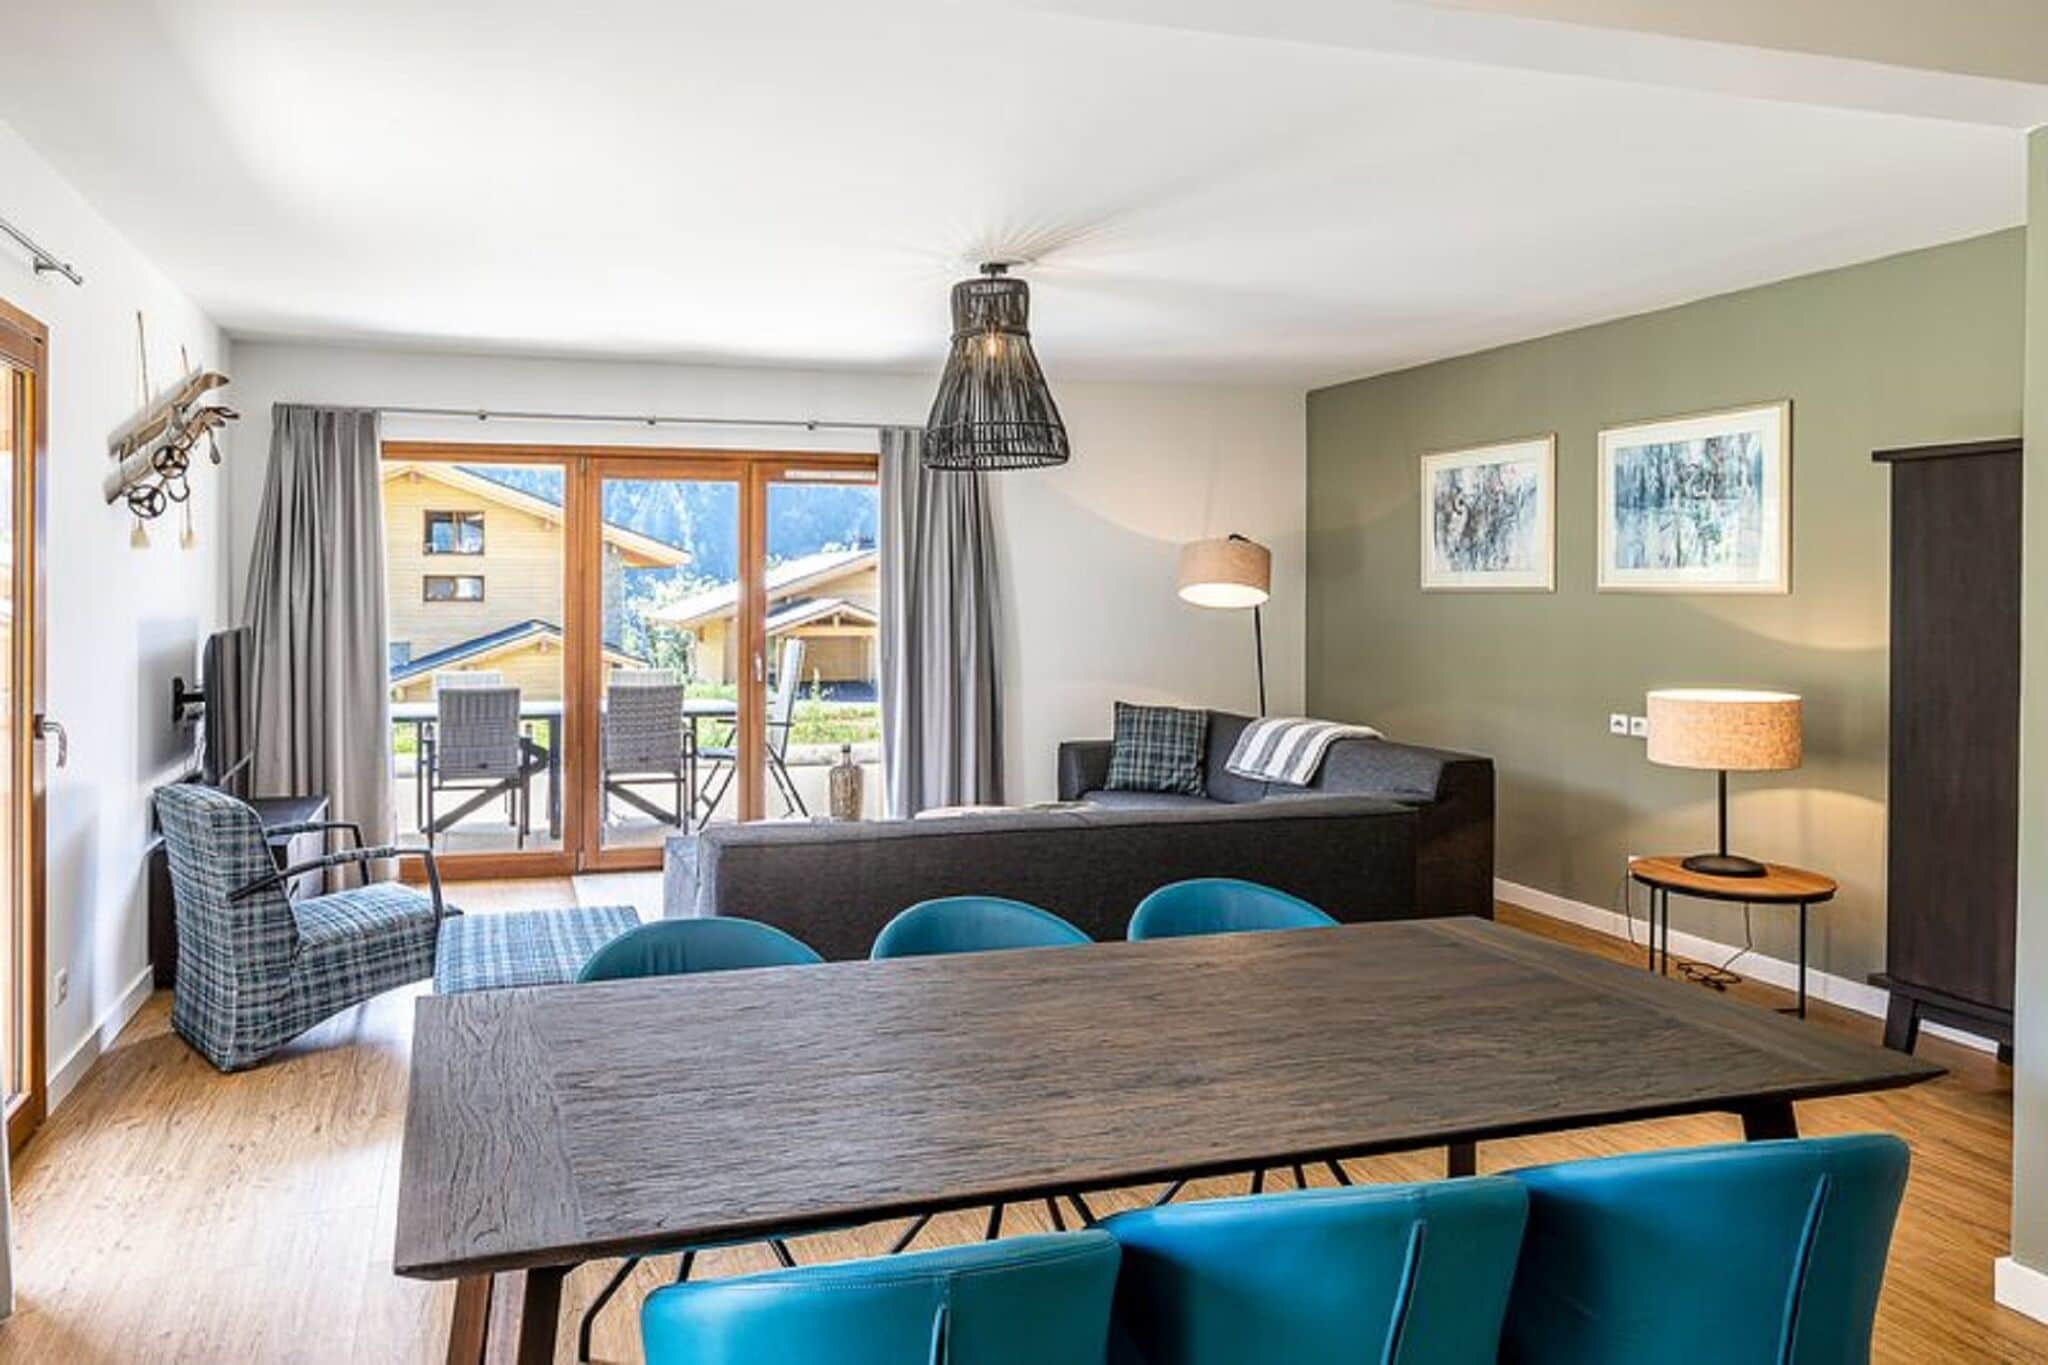 Luxurious apartment with balcony, ski lift 1.5 km away.